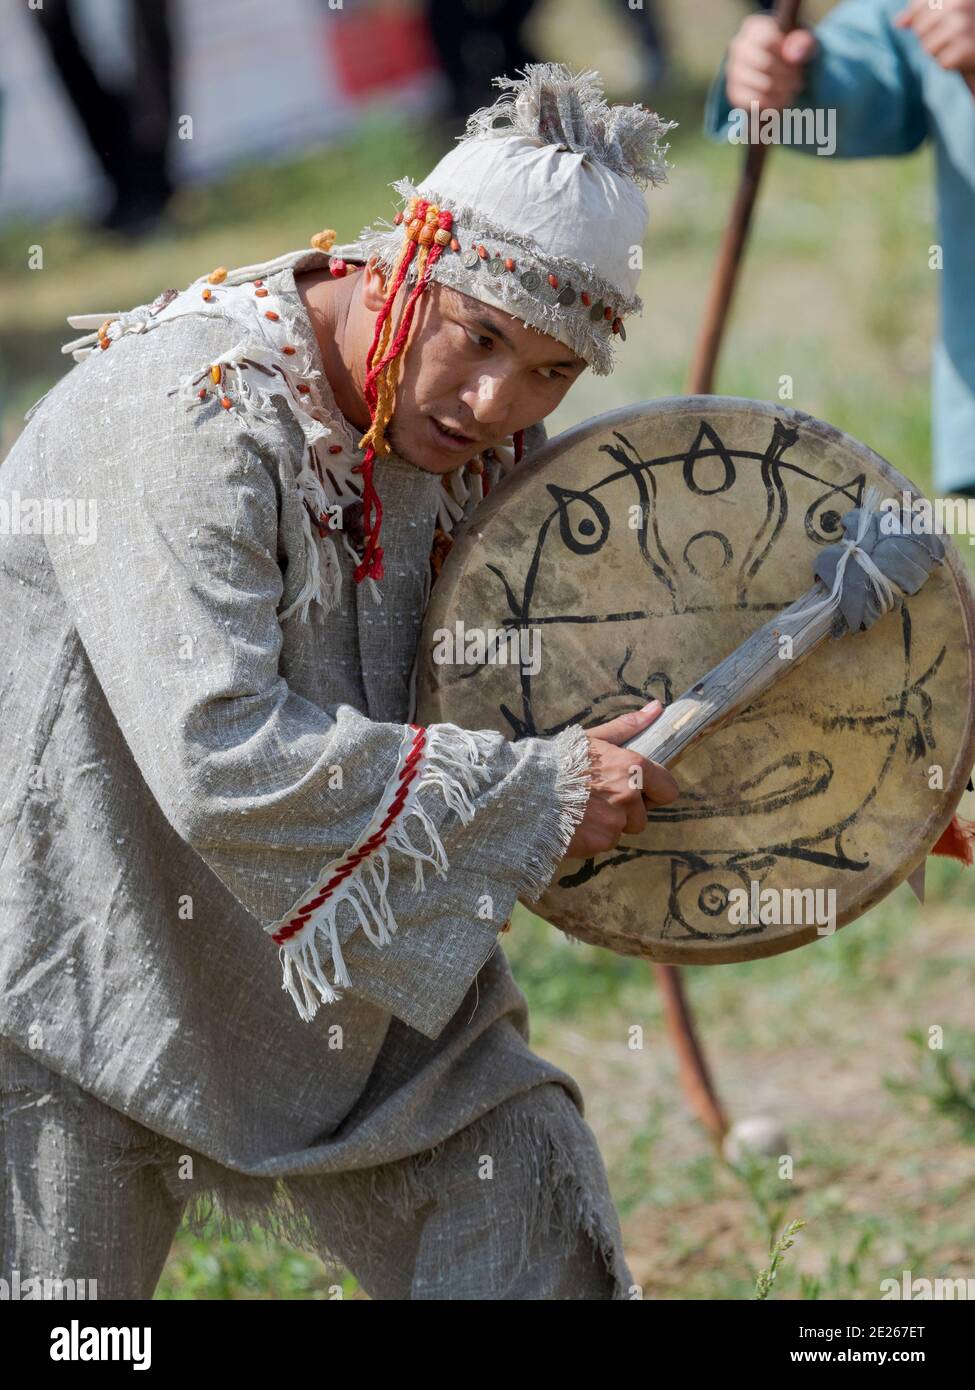 A Shaman recounting the myth. Folk Festival commemorating the origin myth the Tien Shan Maral (Tian Shan wapiti), an origin myth of the Kyrgyz tribes. Stock Photo